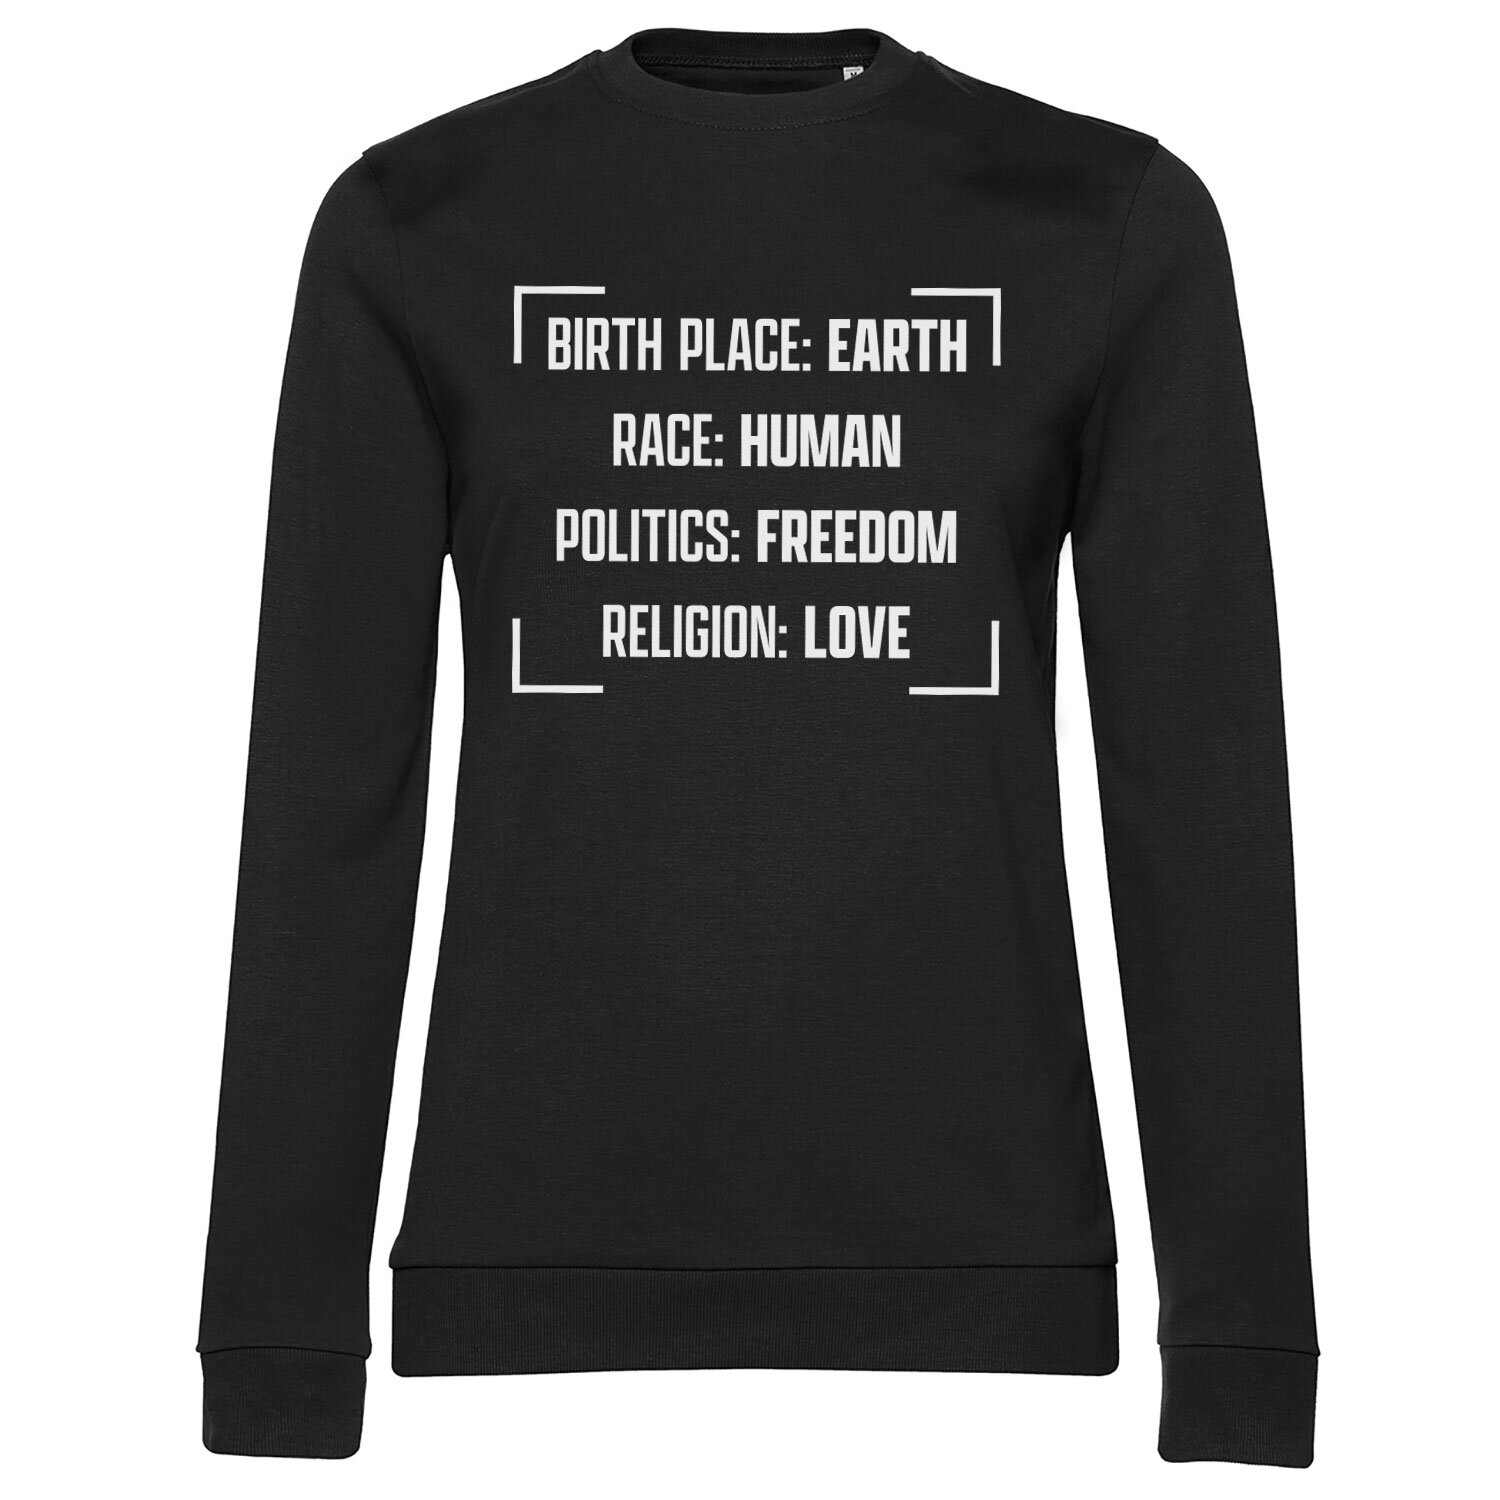 Birthplace - Earth Girly Sweatshirt